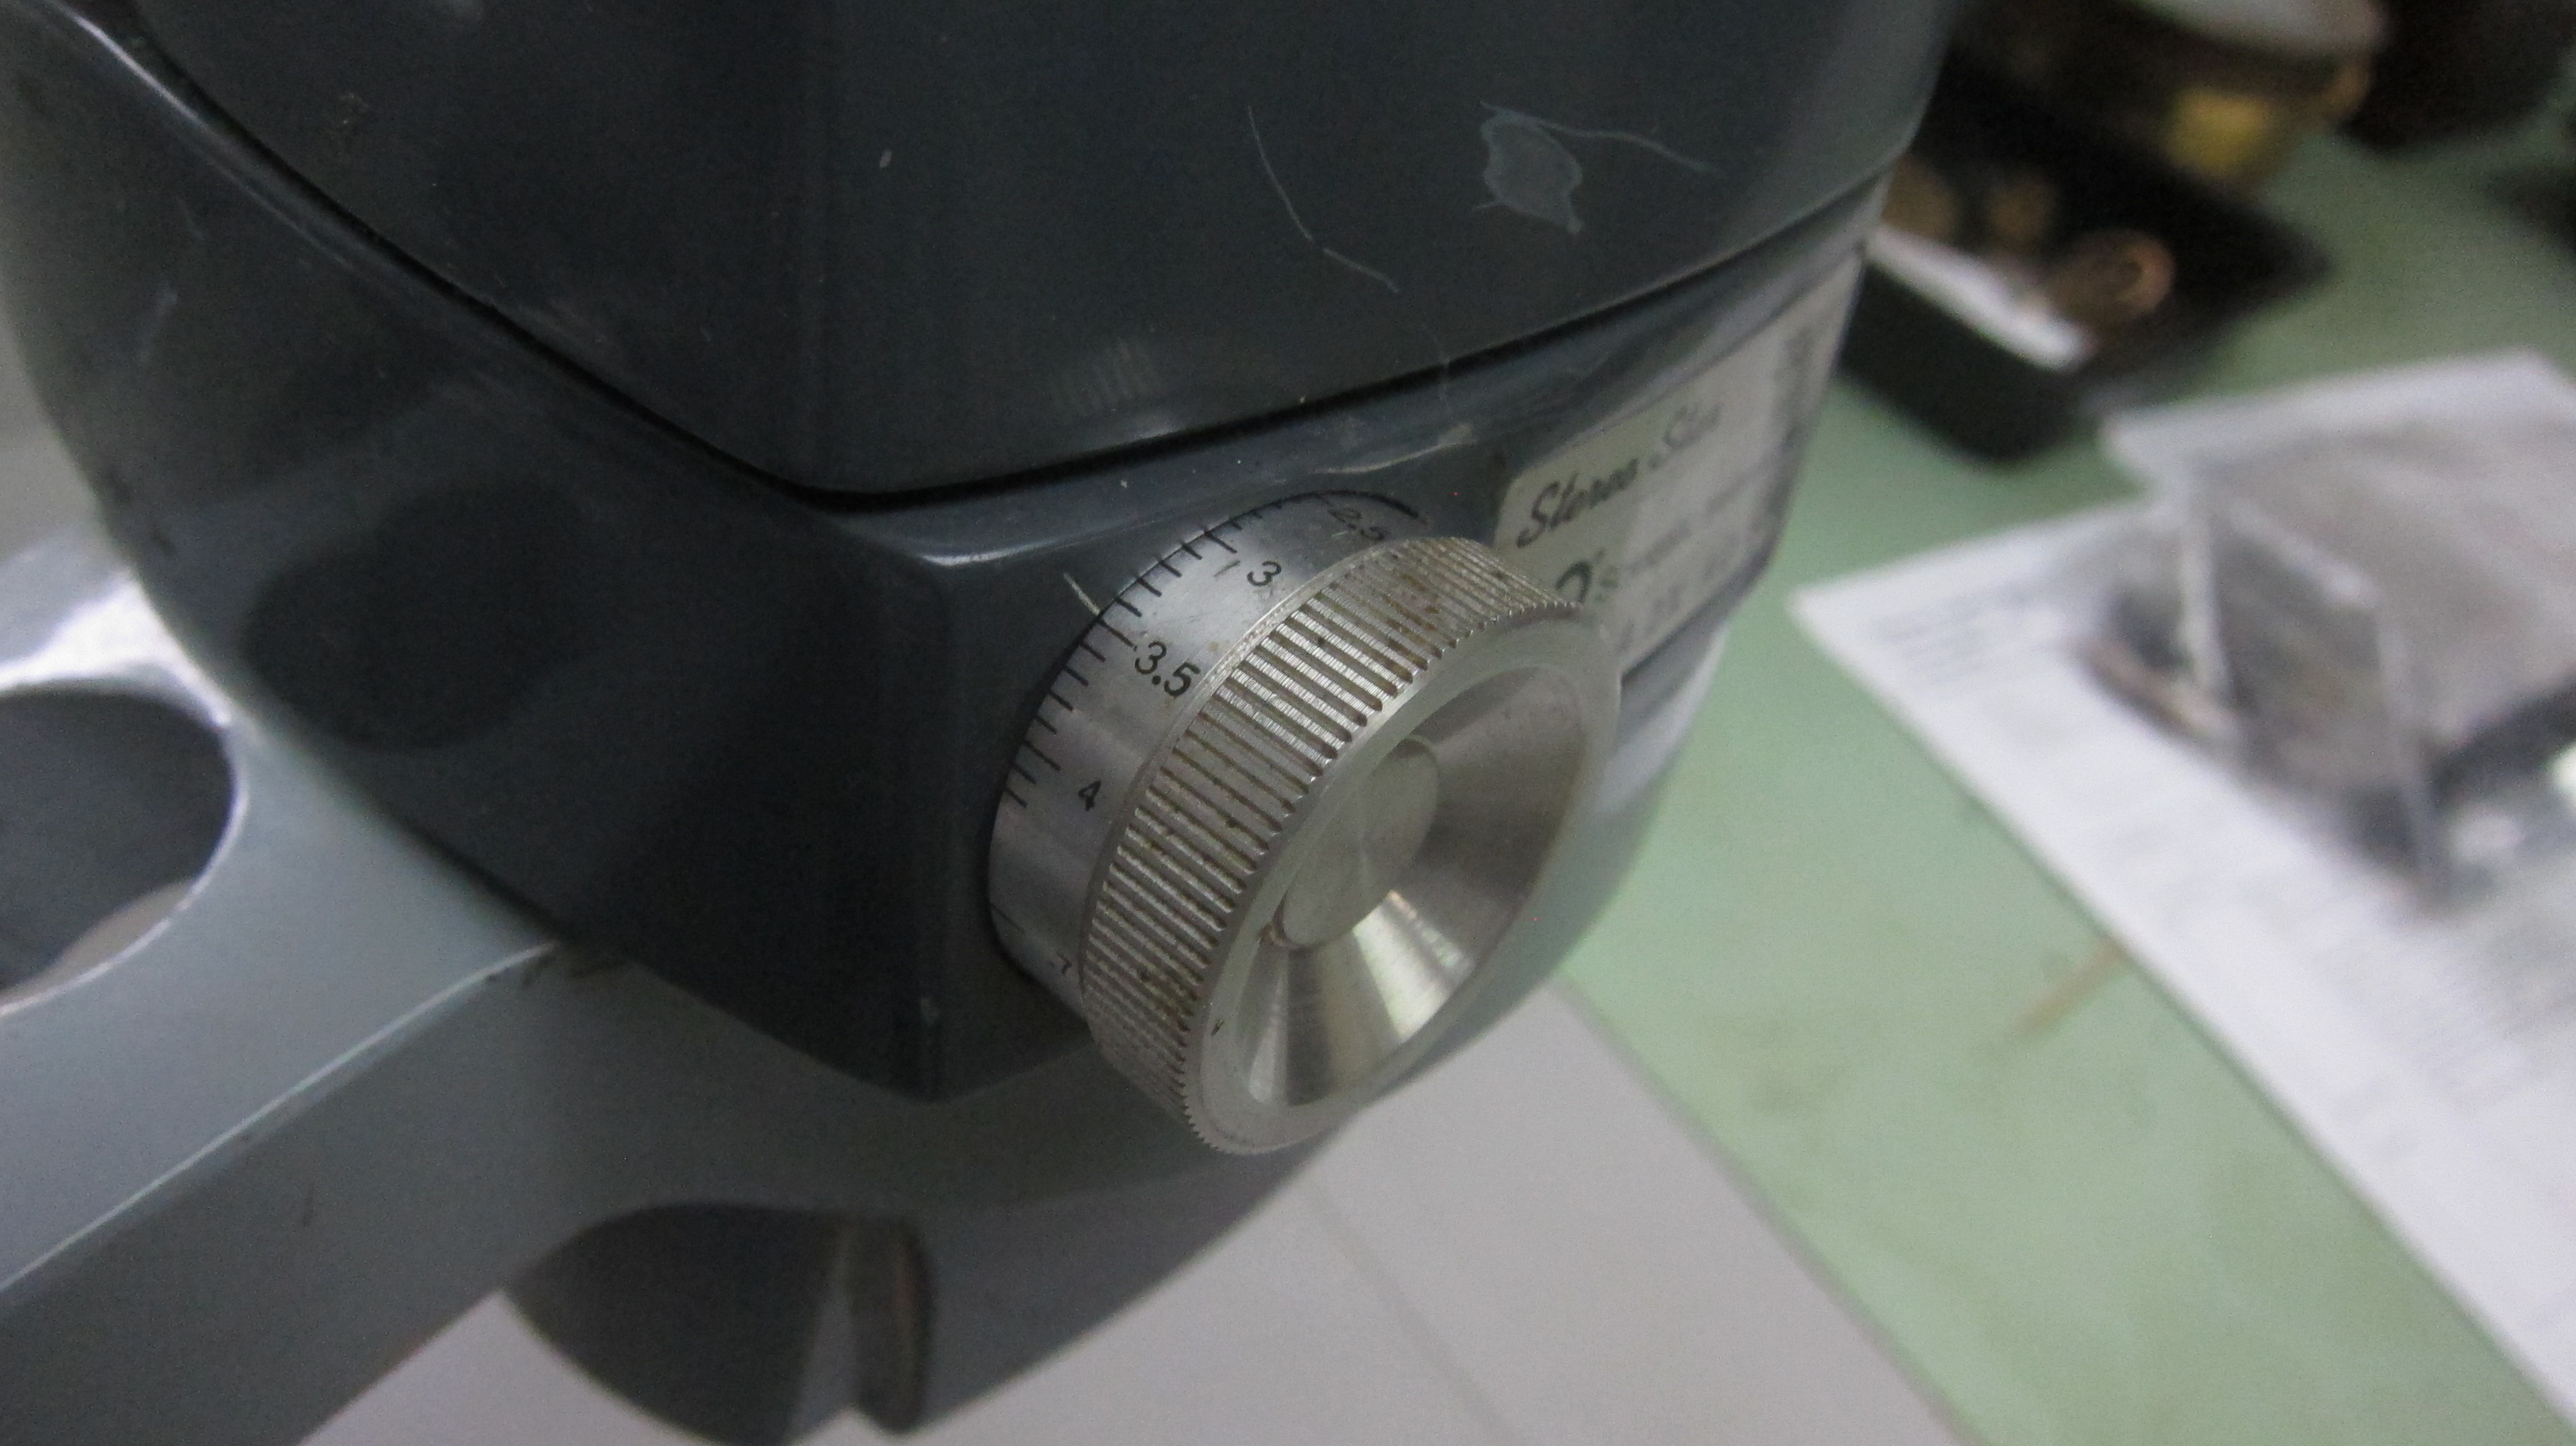 AO AMerican Optical 570 Nikon Stereo Microscope Watchmaking watch repair restoration equipment for sale